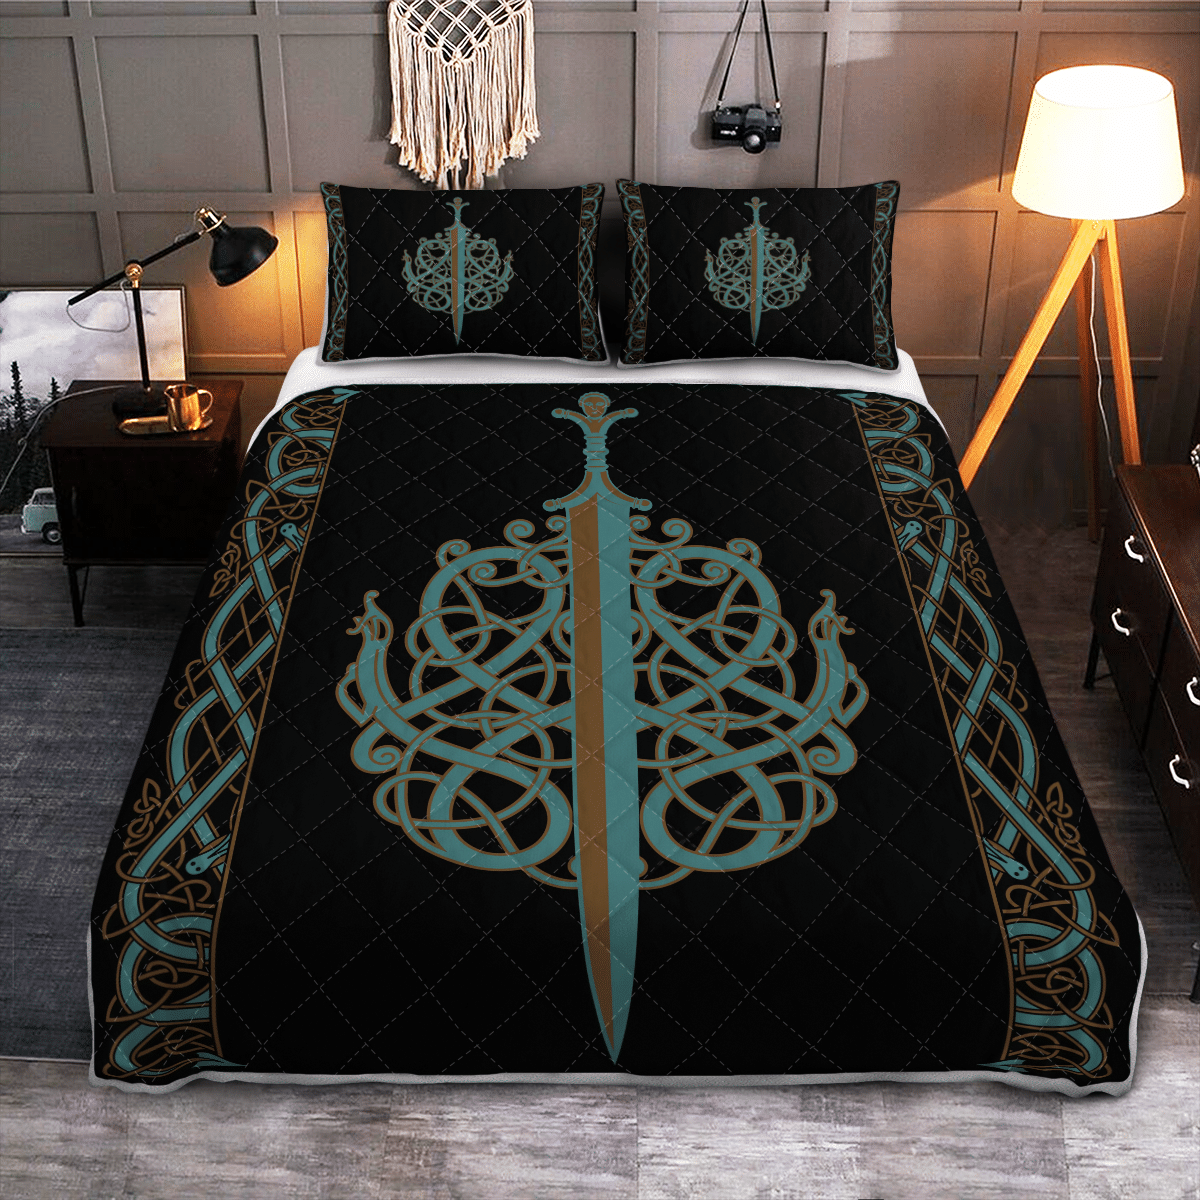 viking-quilt-bed-set-the-ulfberht-swords-viking-quilt-bedding-set